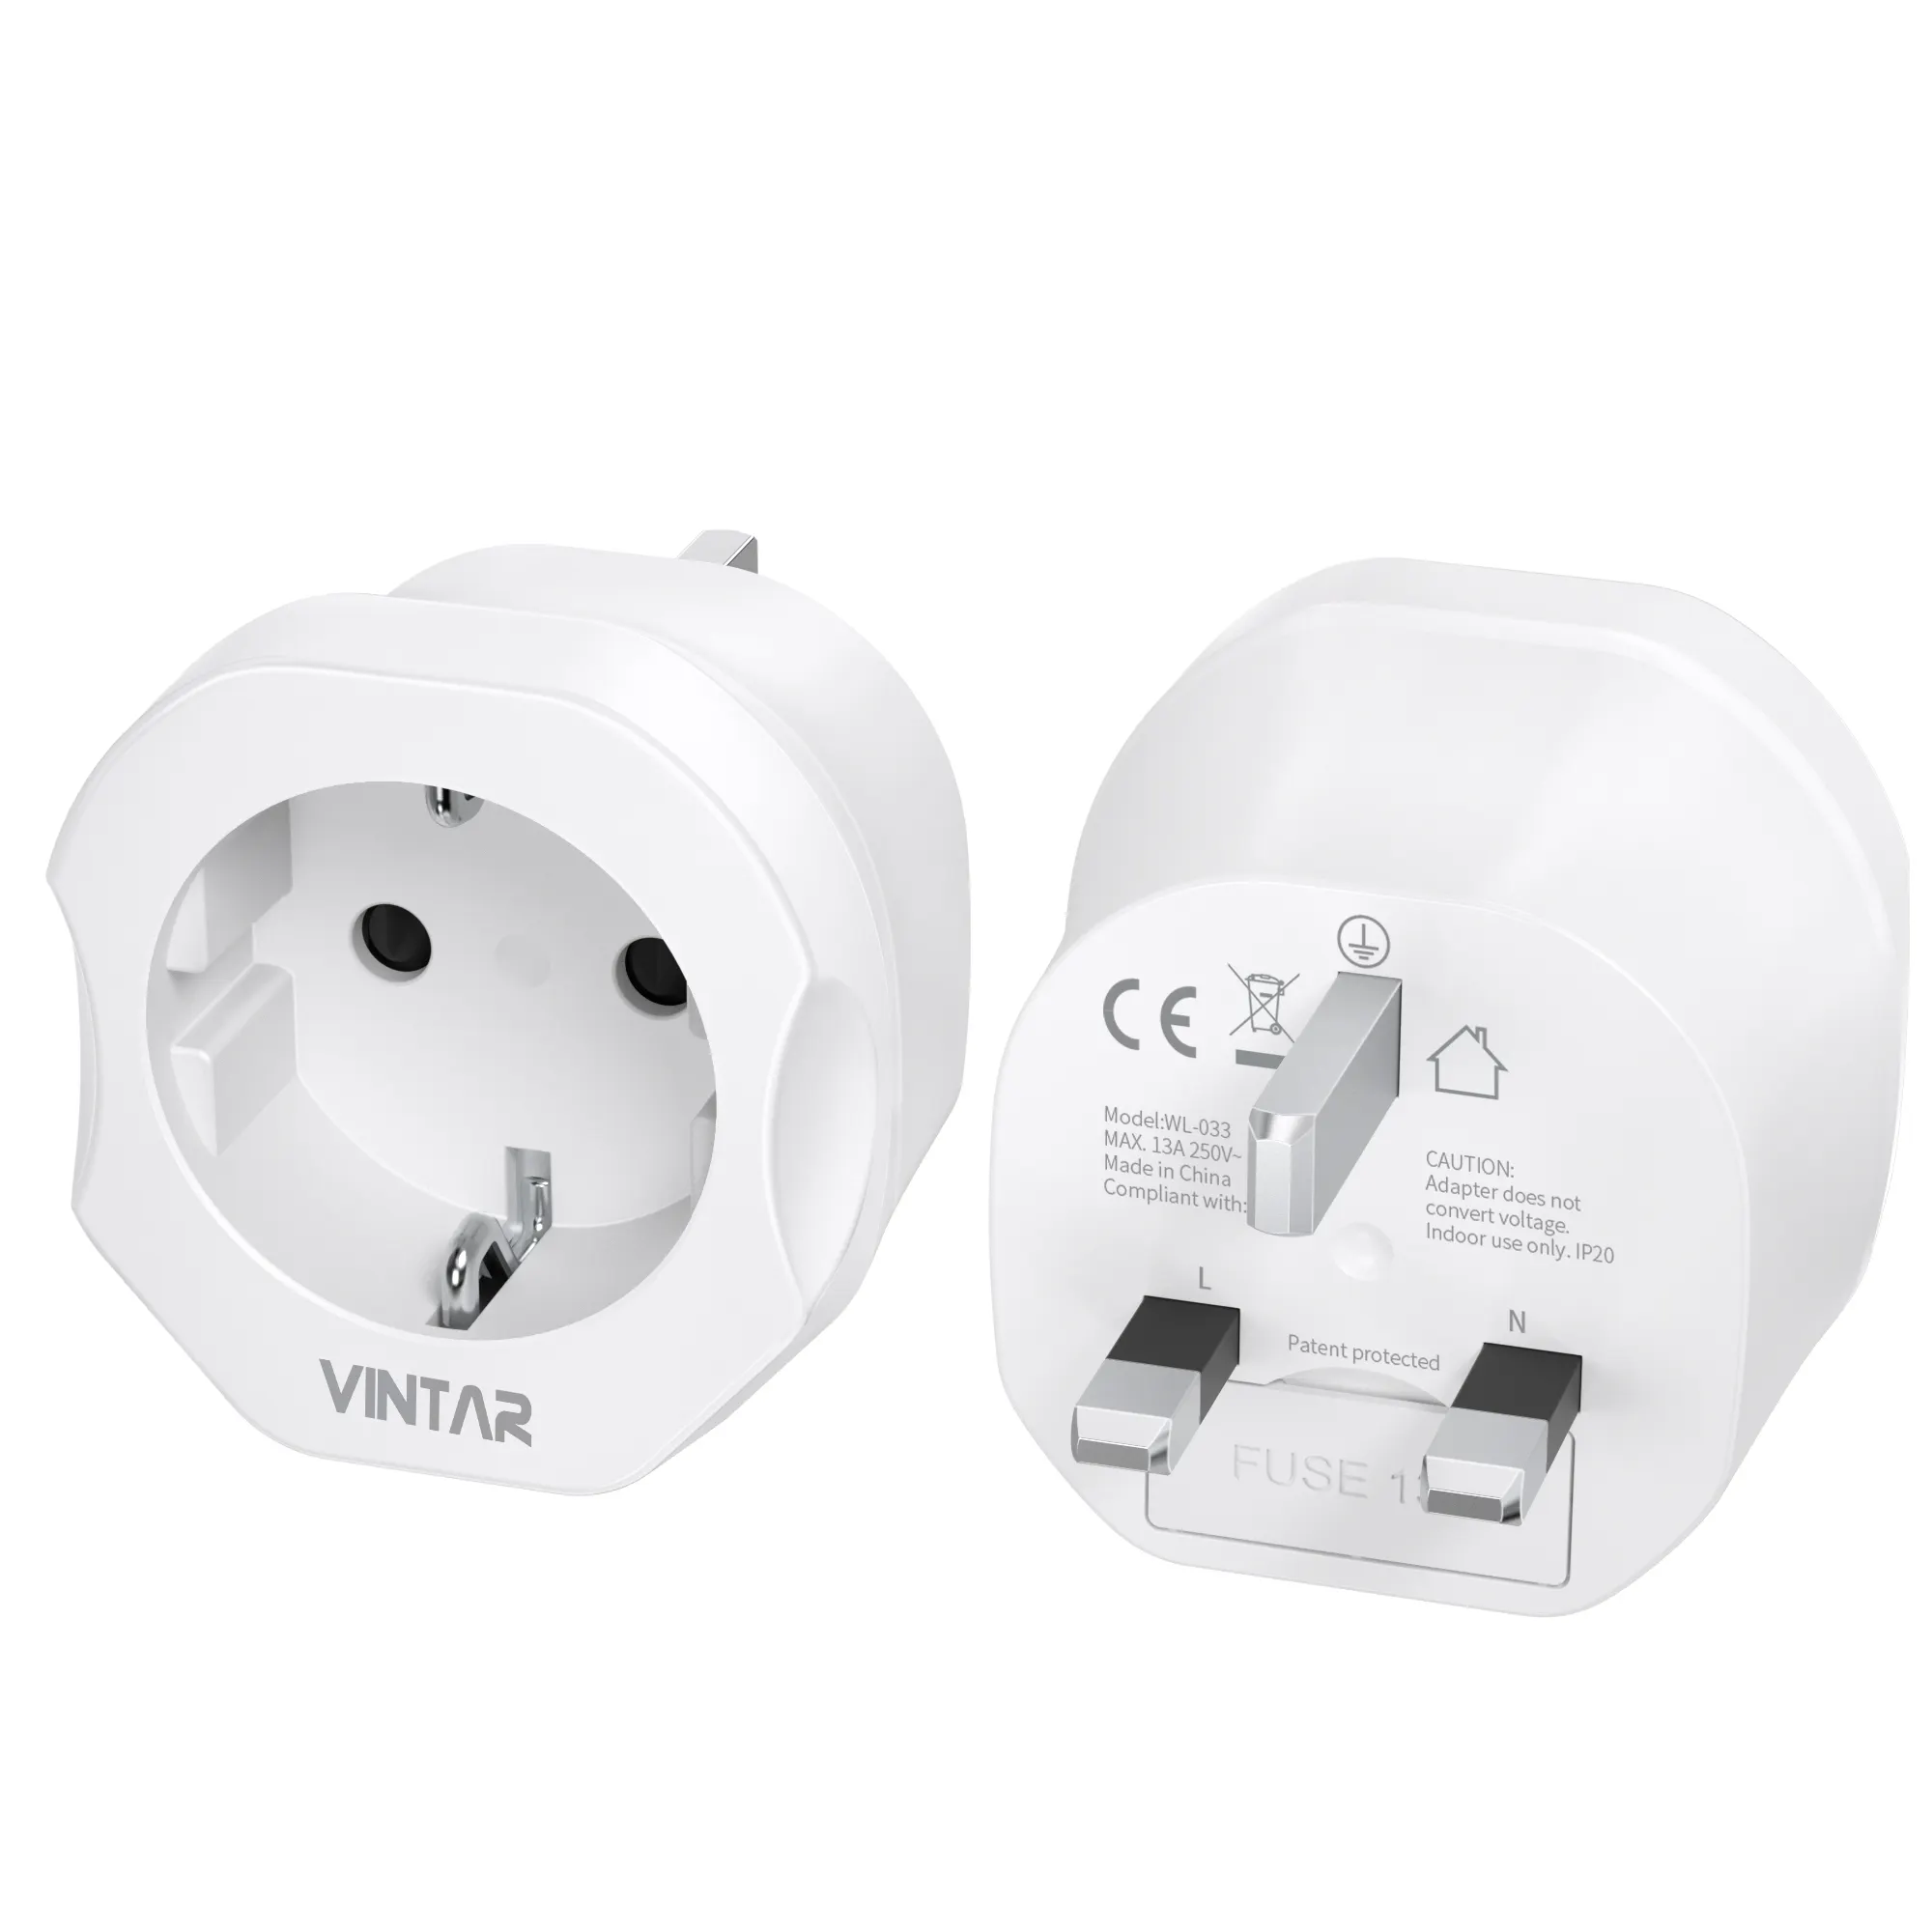 VINTAR 2 Pin to 3 Pin EU to UK Plug Adapter European to UK Travel Plug Adaptor